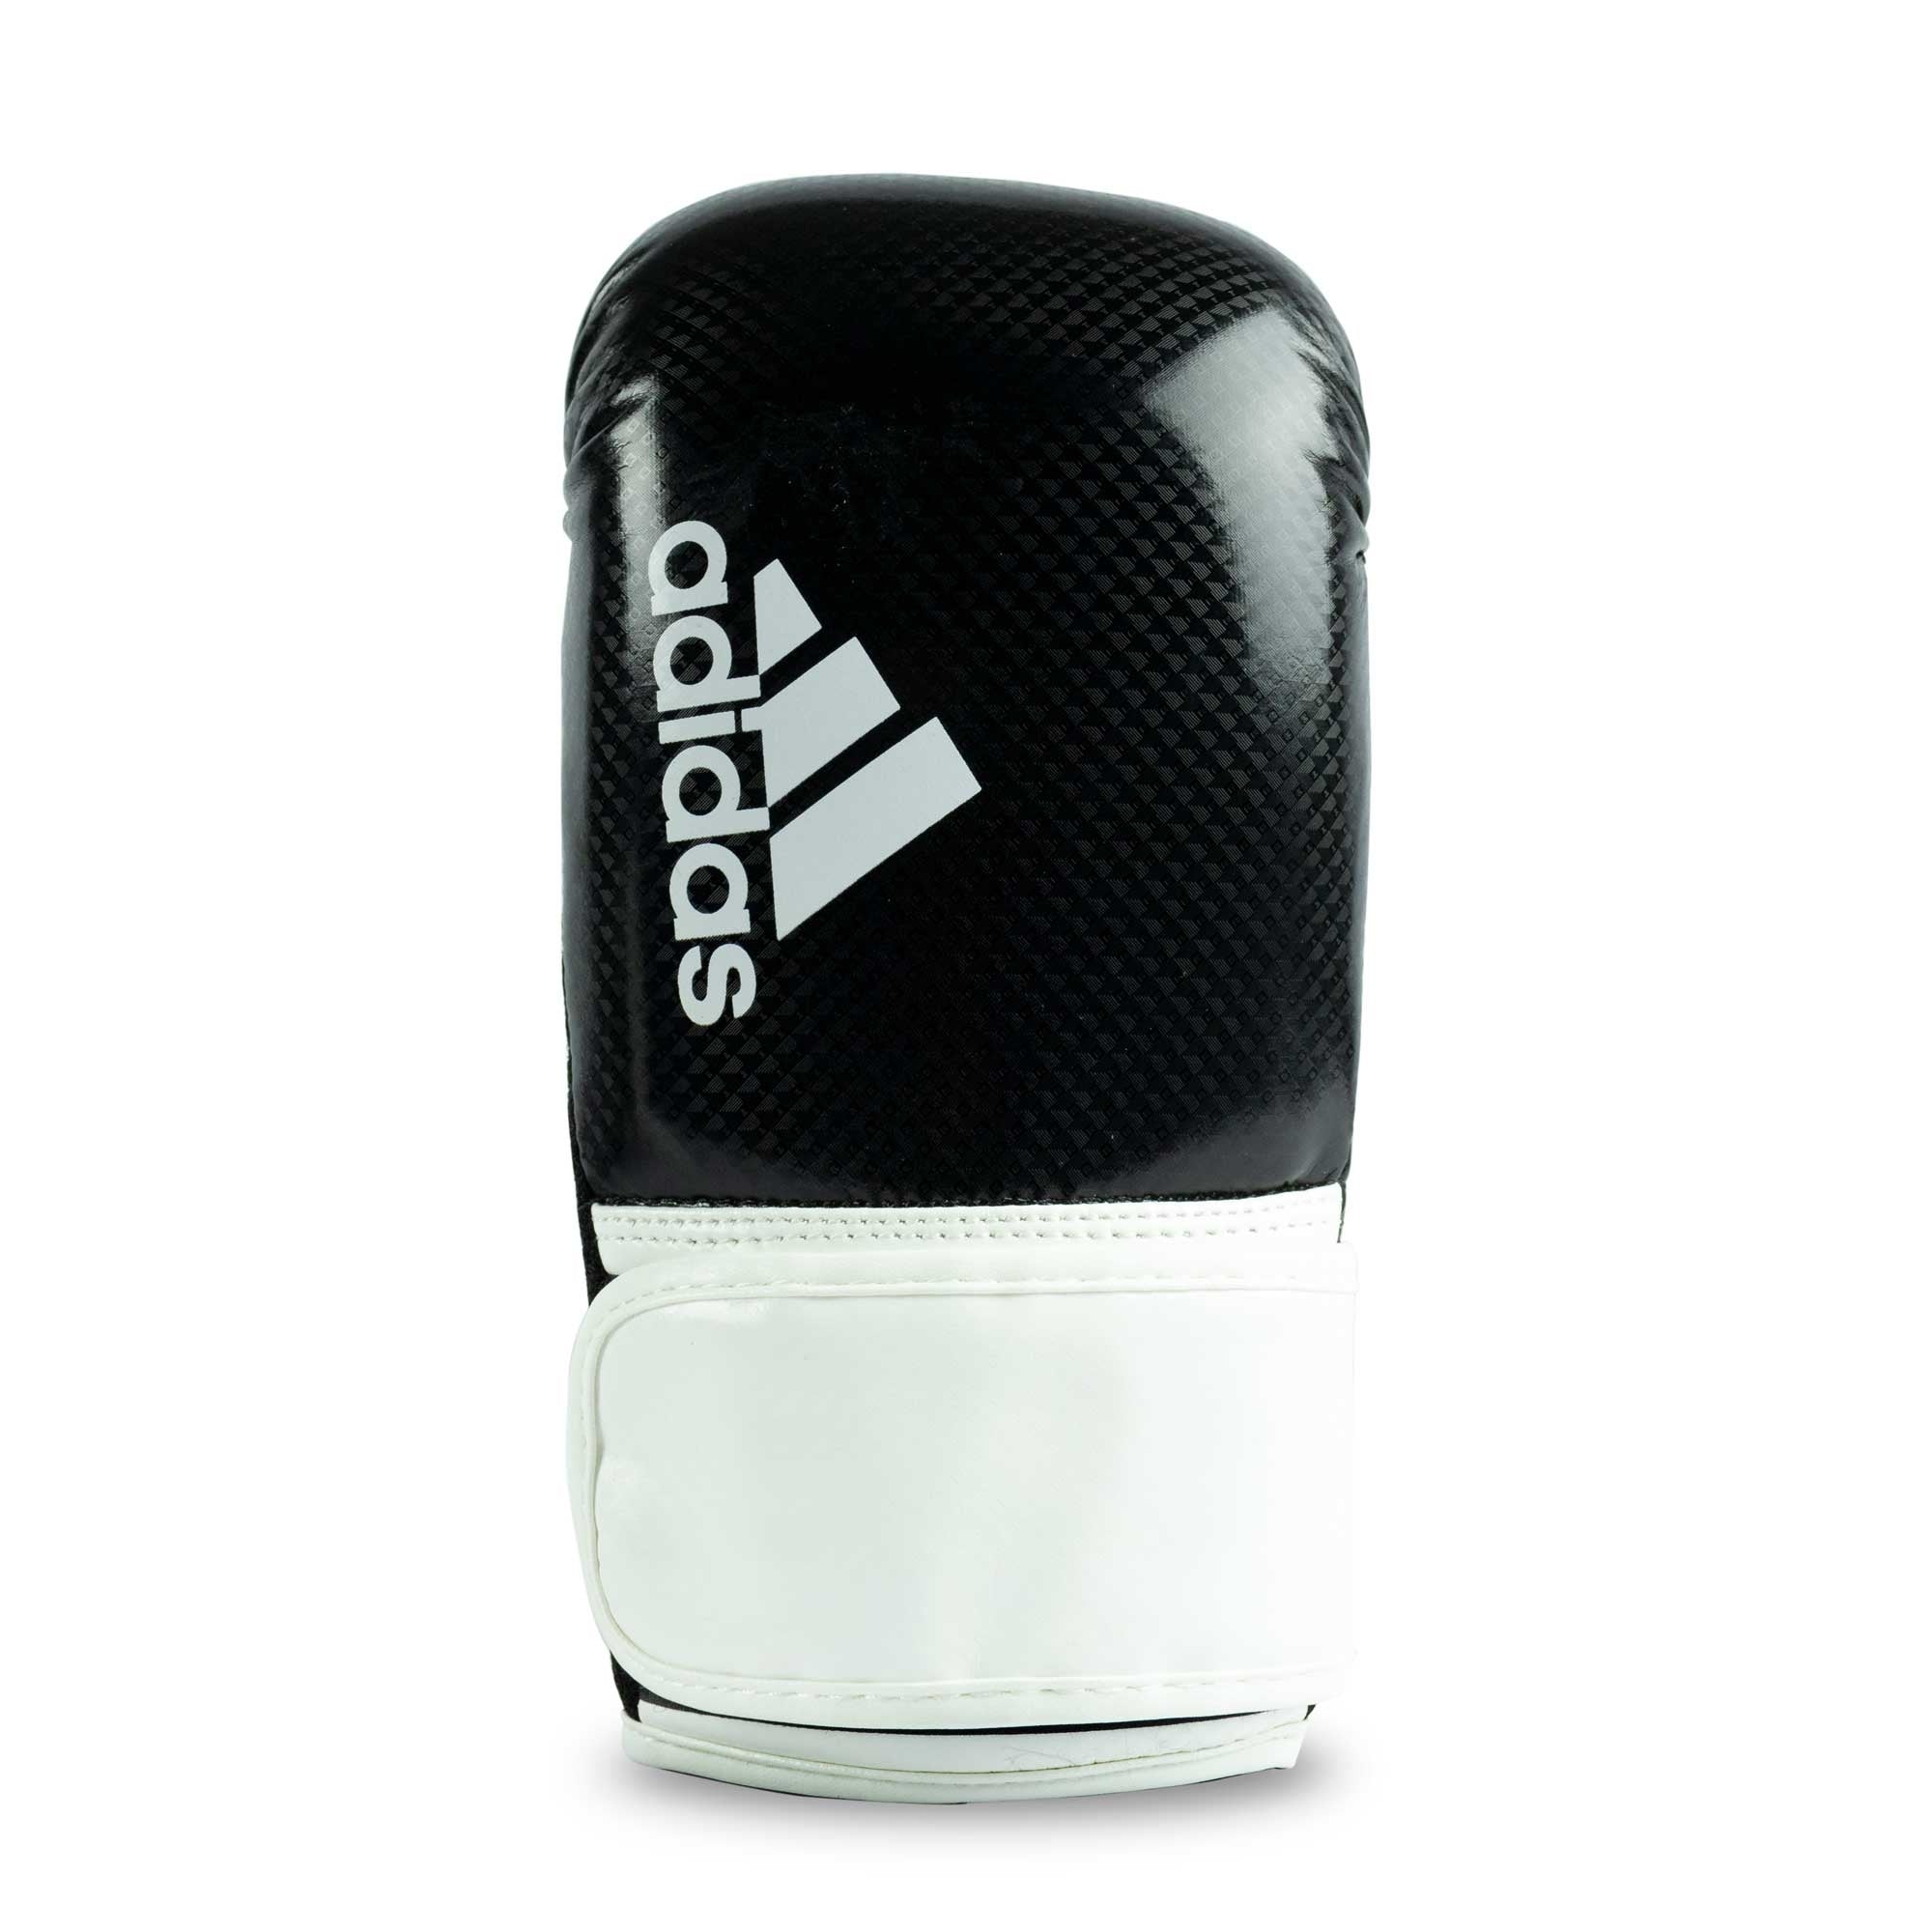 Adidas Hybrid 75 Boxing Gloves, open thumb